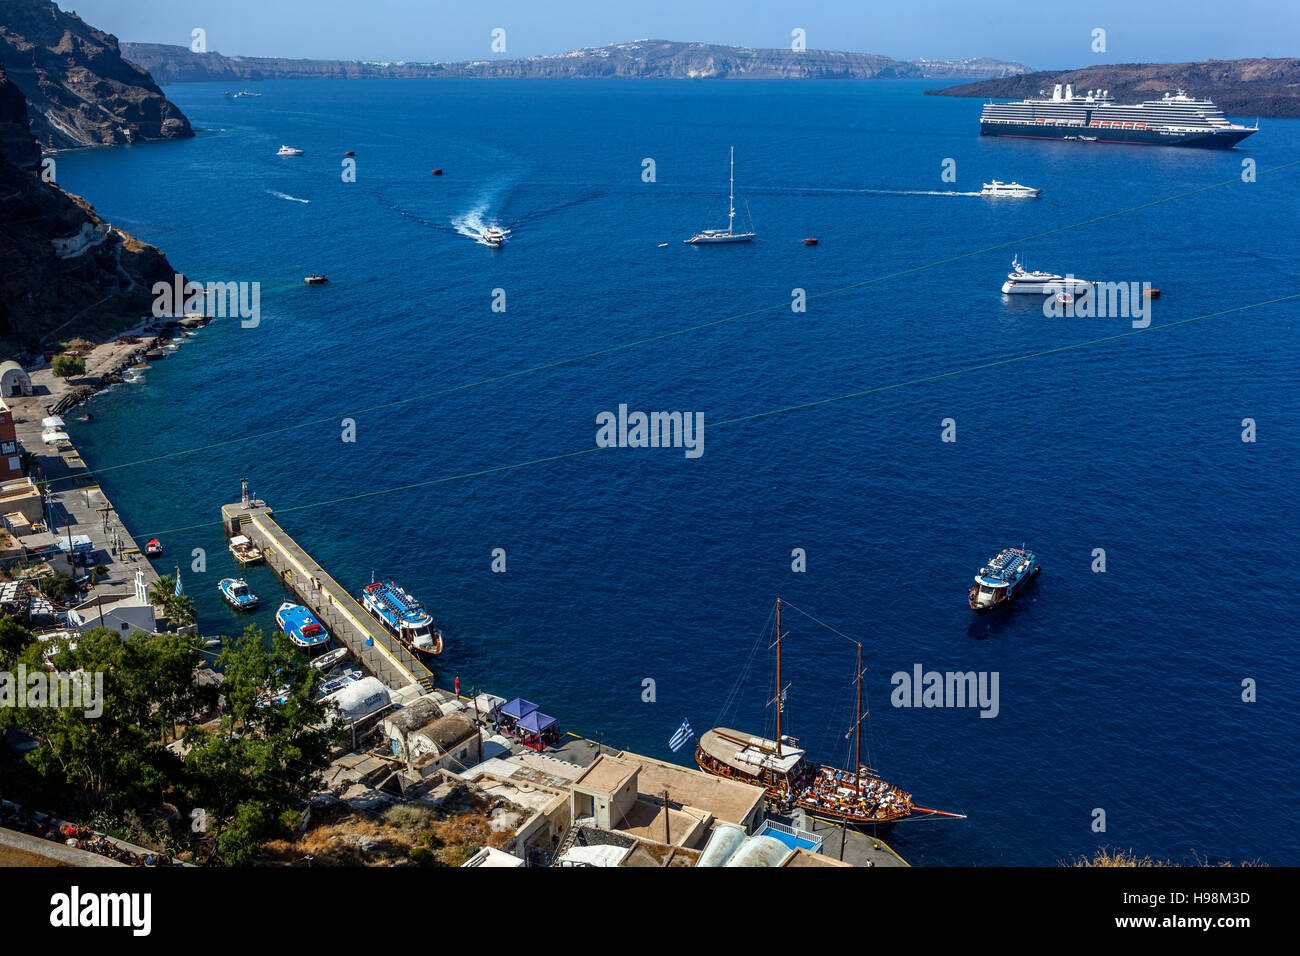 Cruises moored in the caldera, Santorini harbour, Aegean Sea, Cyclades Islands, Greece Stock Photo